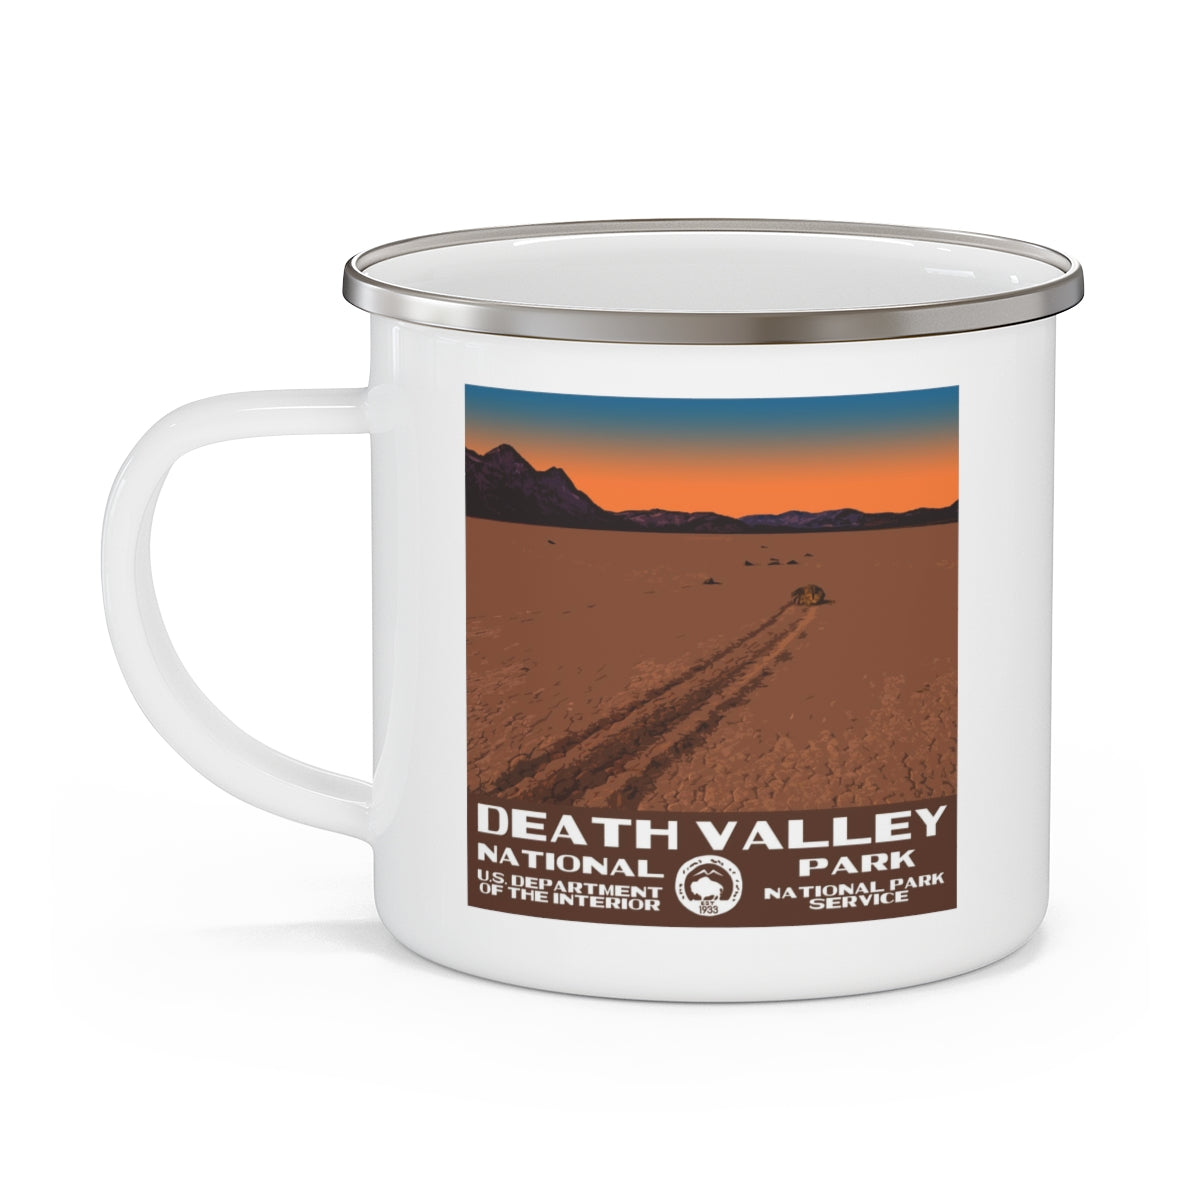 Death Valley National Park Enamel Camping Mug - Racetrack Playa